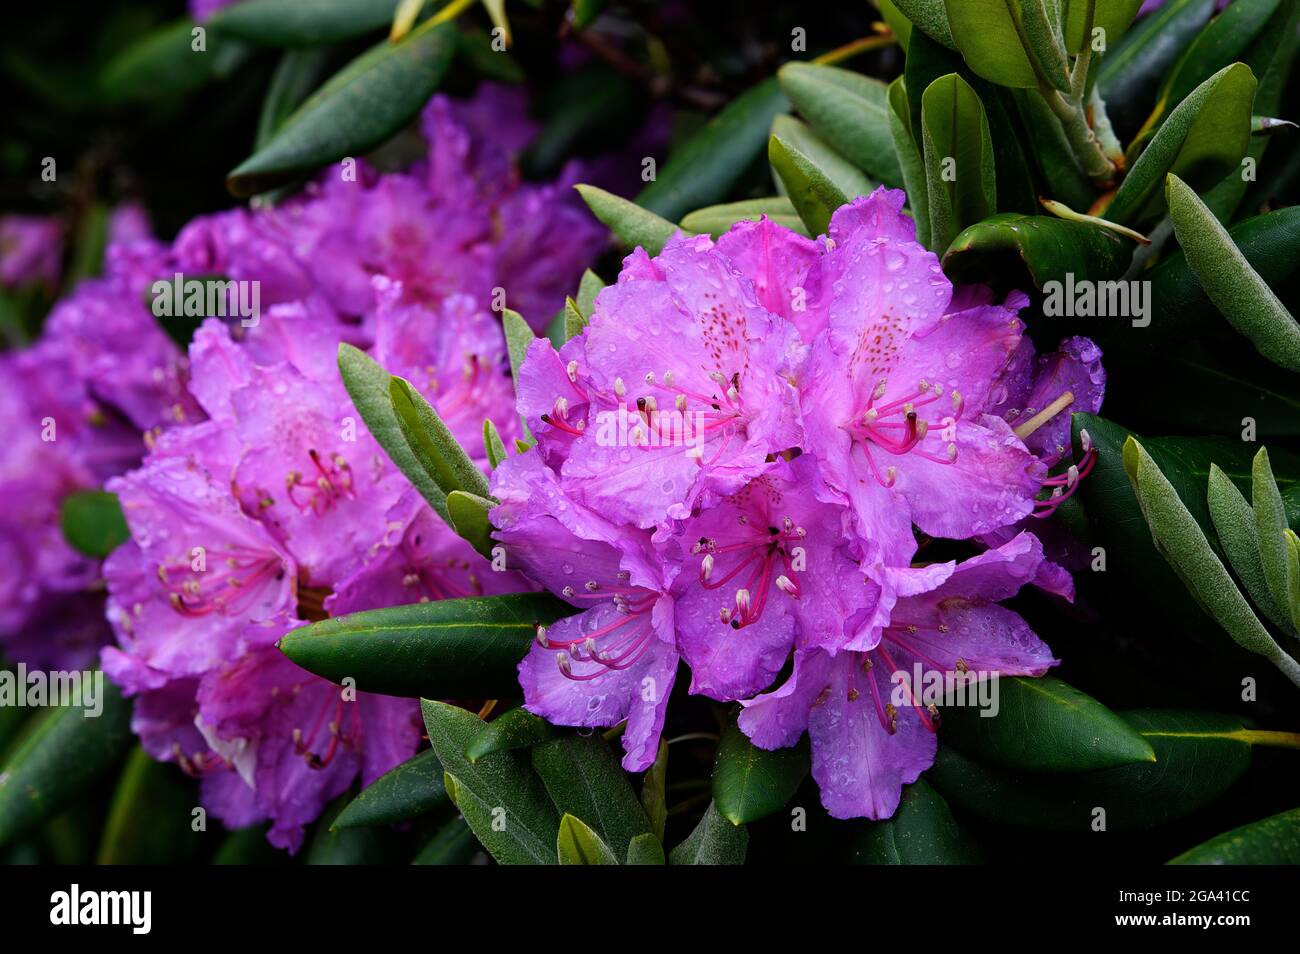 Closeup of Rhodendron bloom, Cloudland Trail, North Carolina Stock Photo